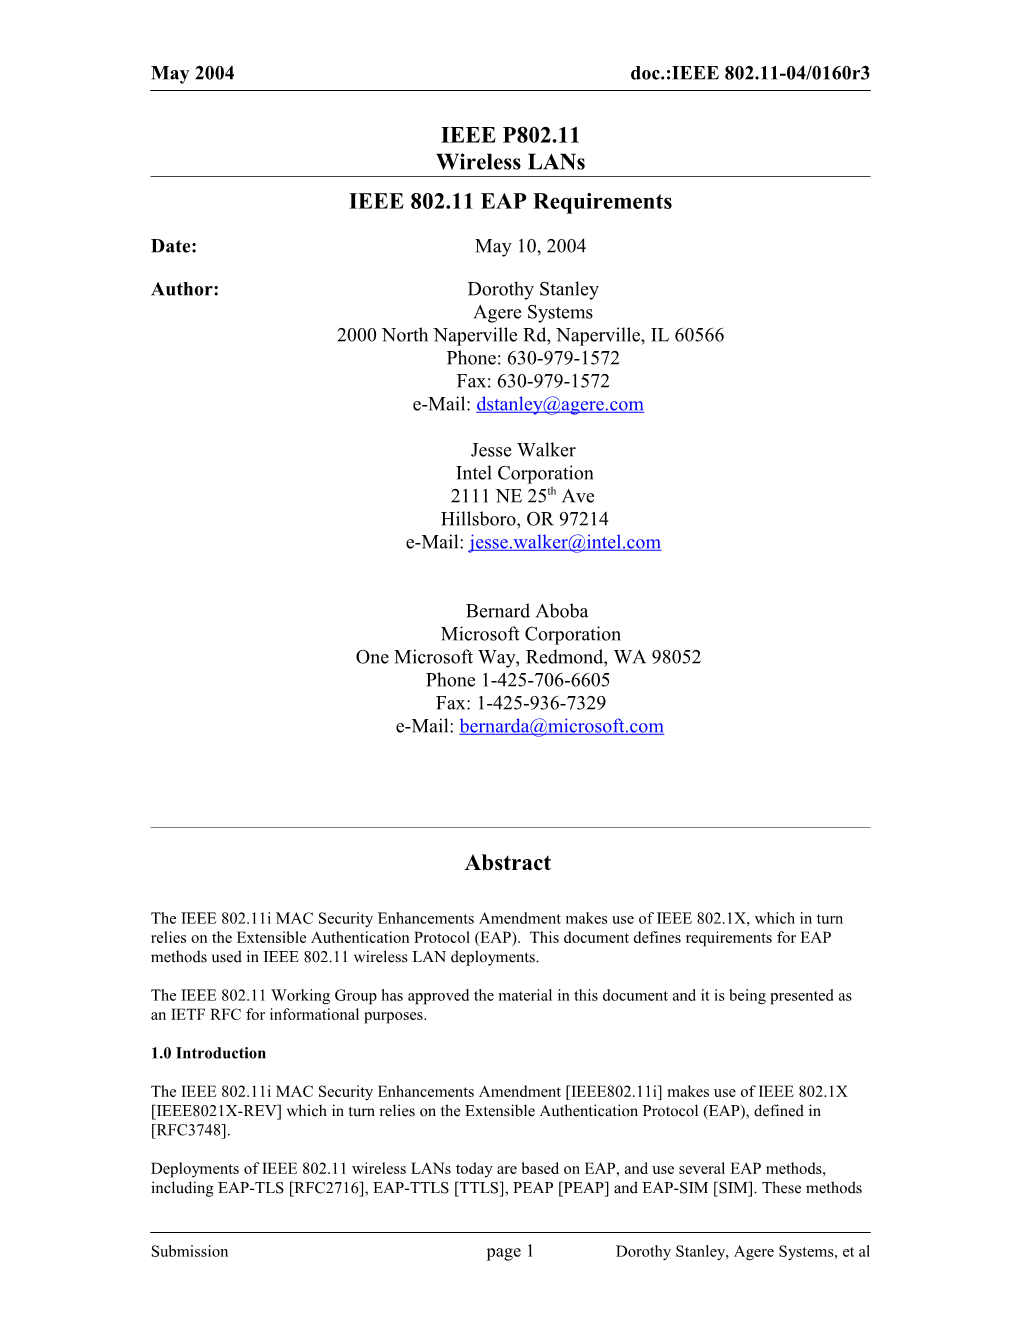 IEEE 802.11 EAP Requirements